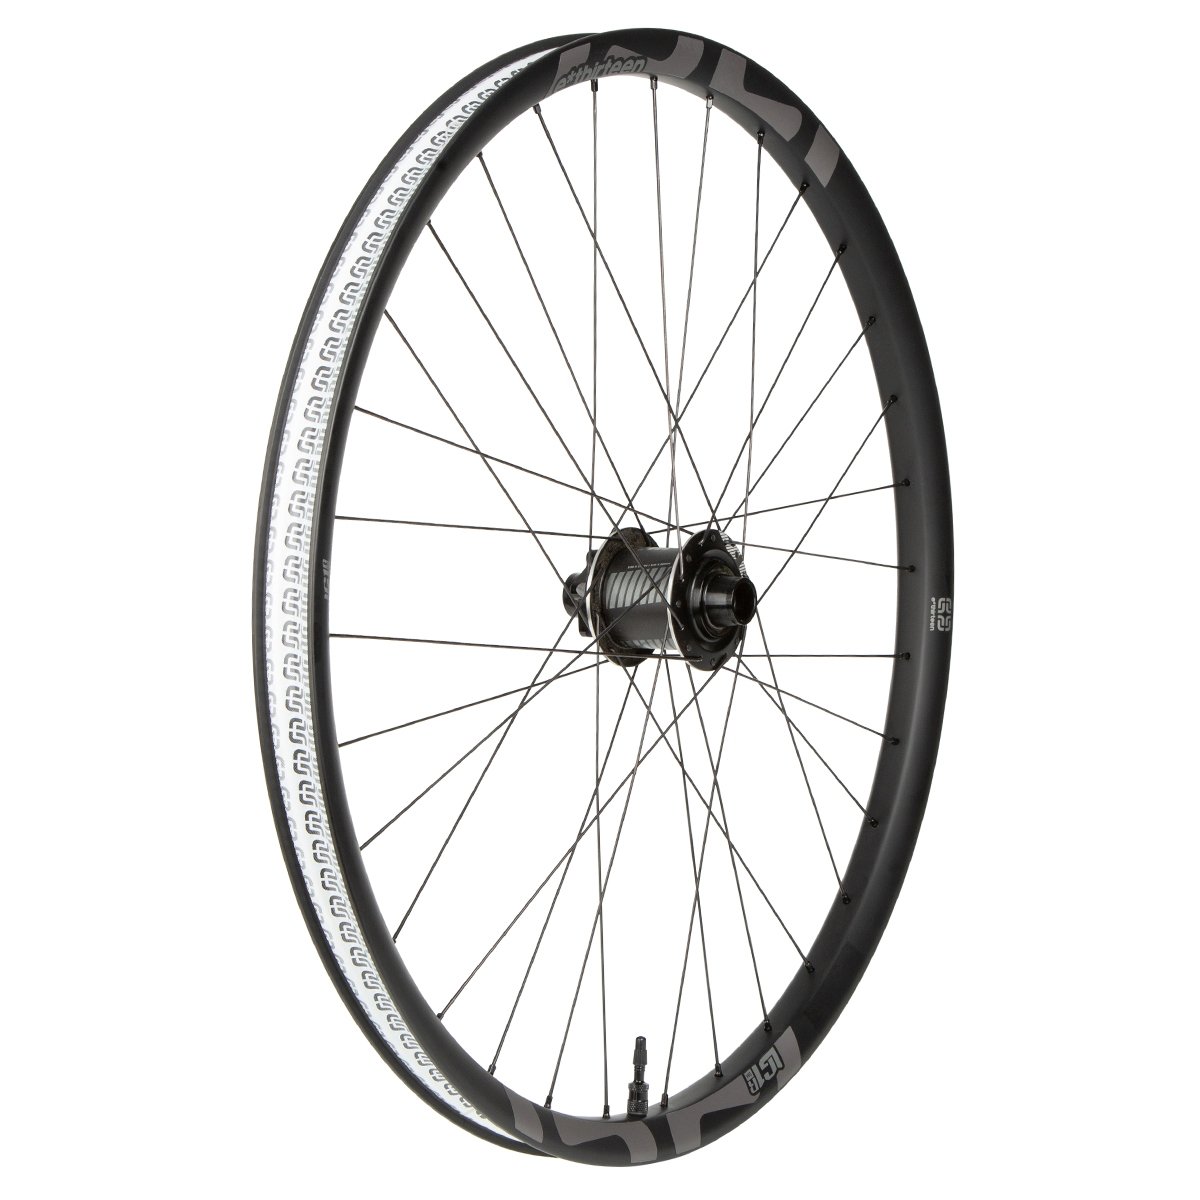 E*thirteen Wheel LG1 DH Race Carbon Front, 27.5 Inches, 110x20 mm, 31 mm, Black